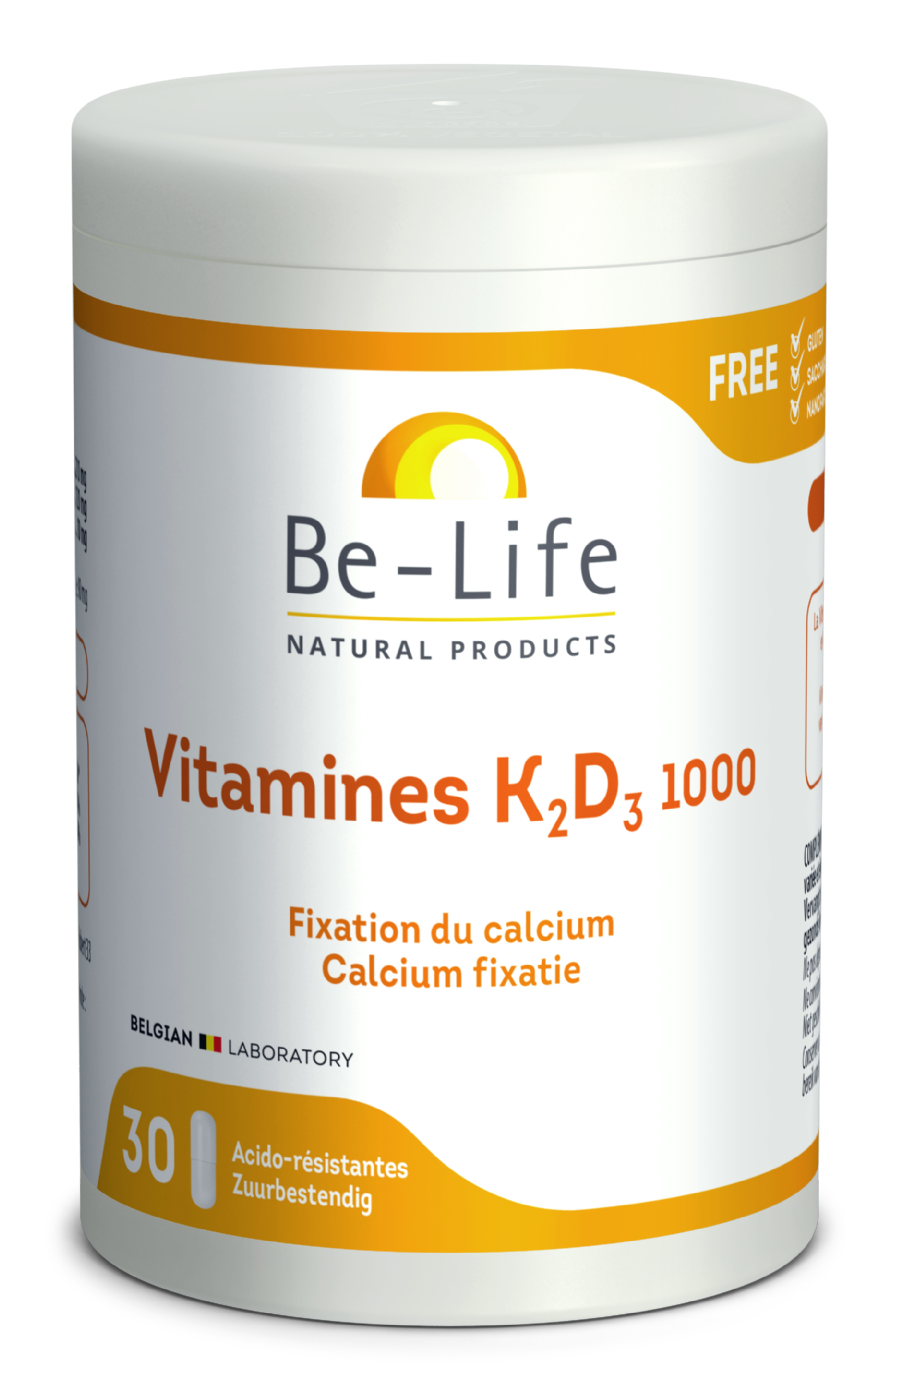 Be-life Vitamines K2 D3 1000 Capsules kopen